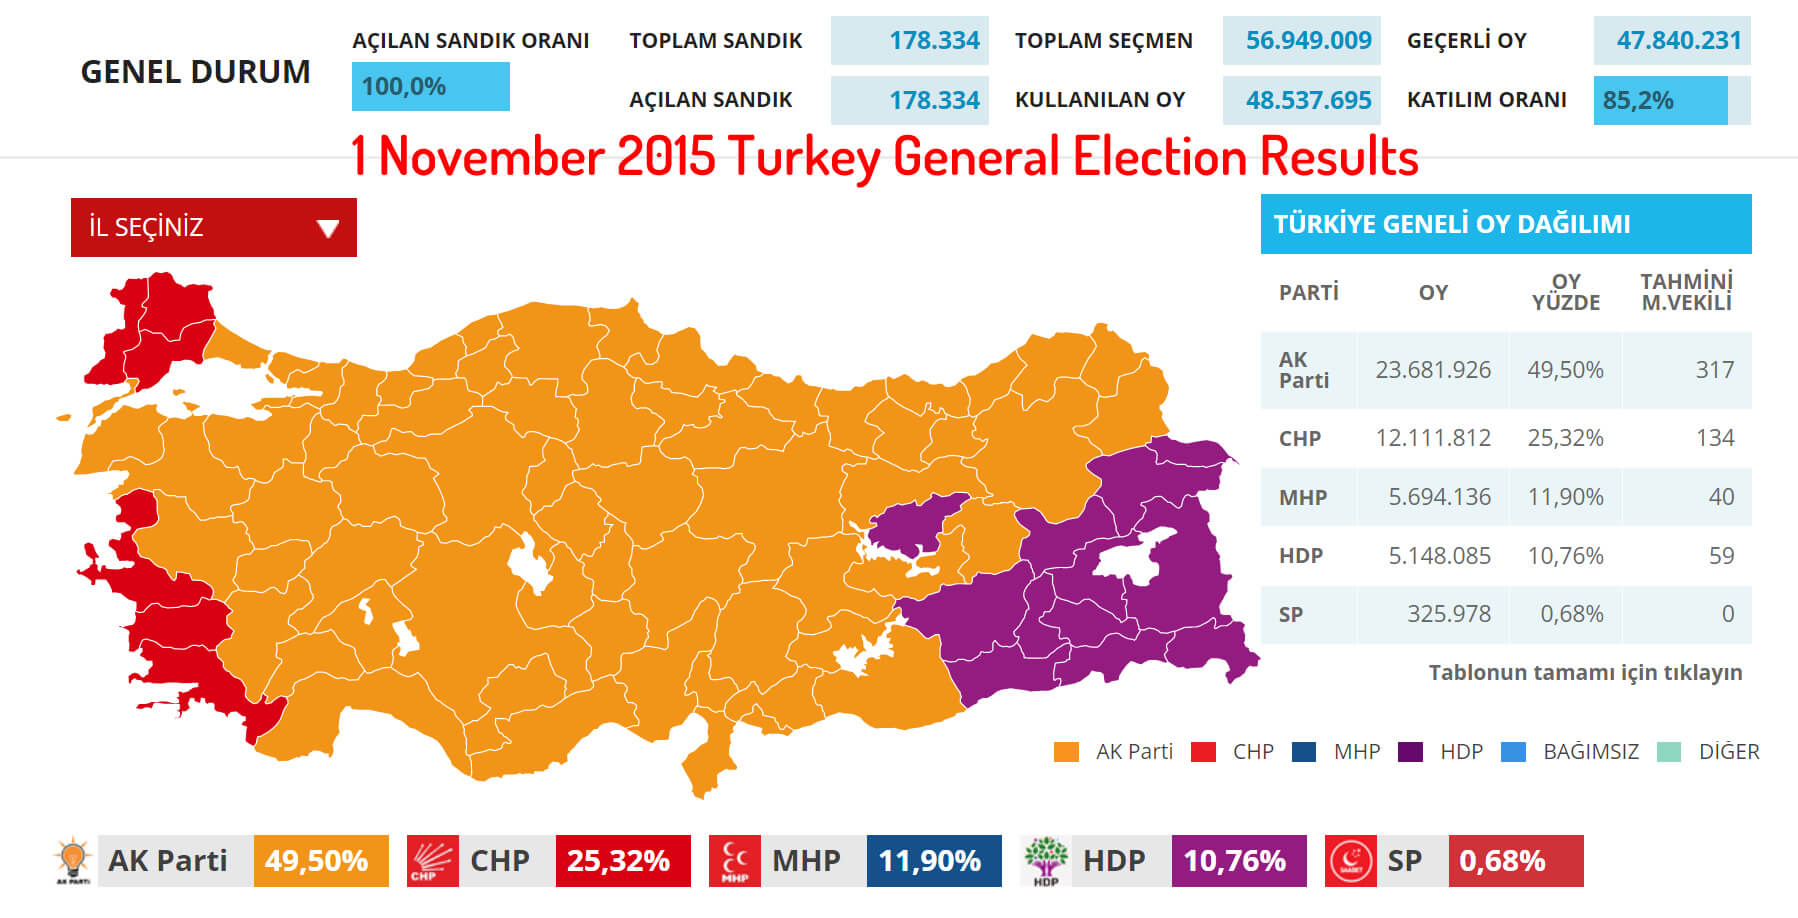 1 November 2015 Turkey General Election Results